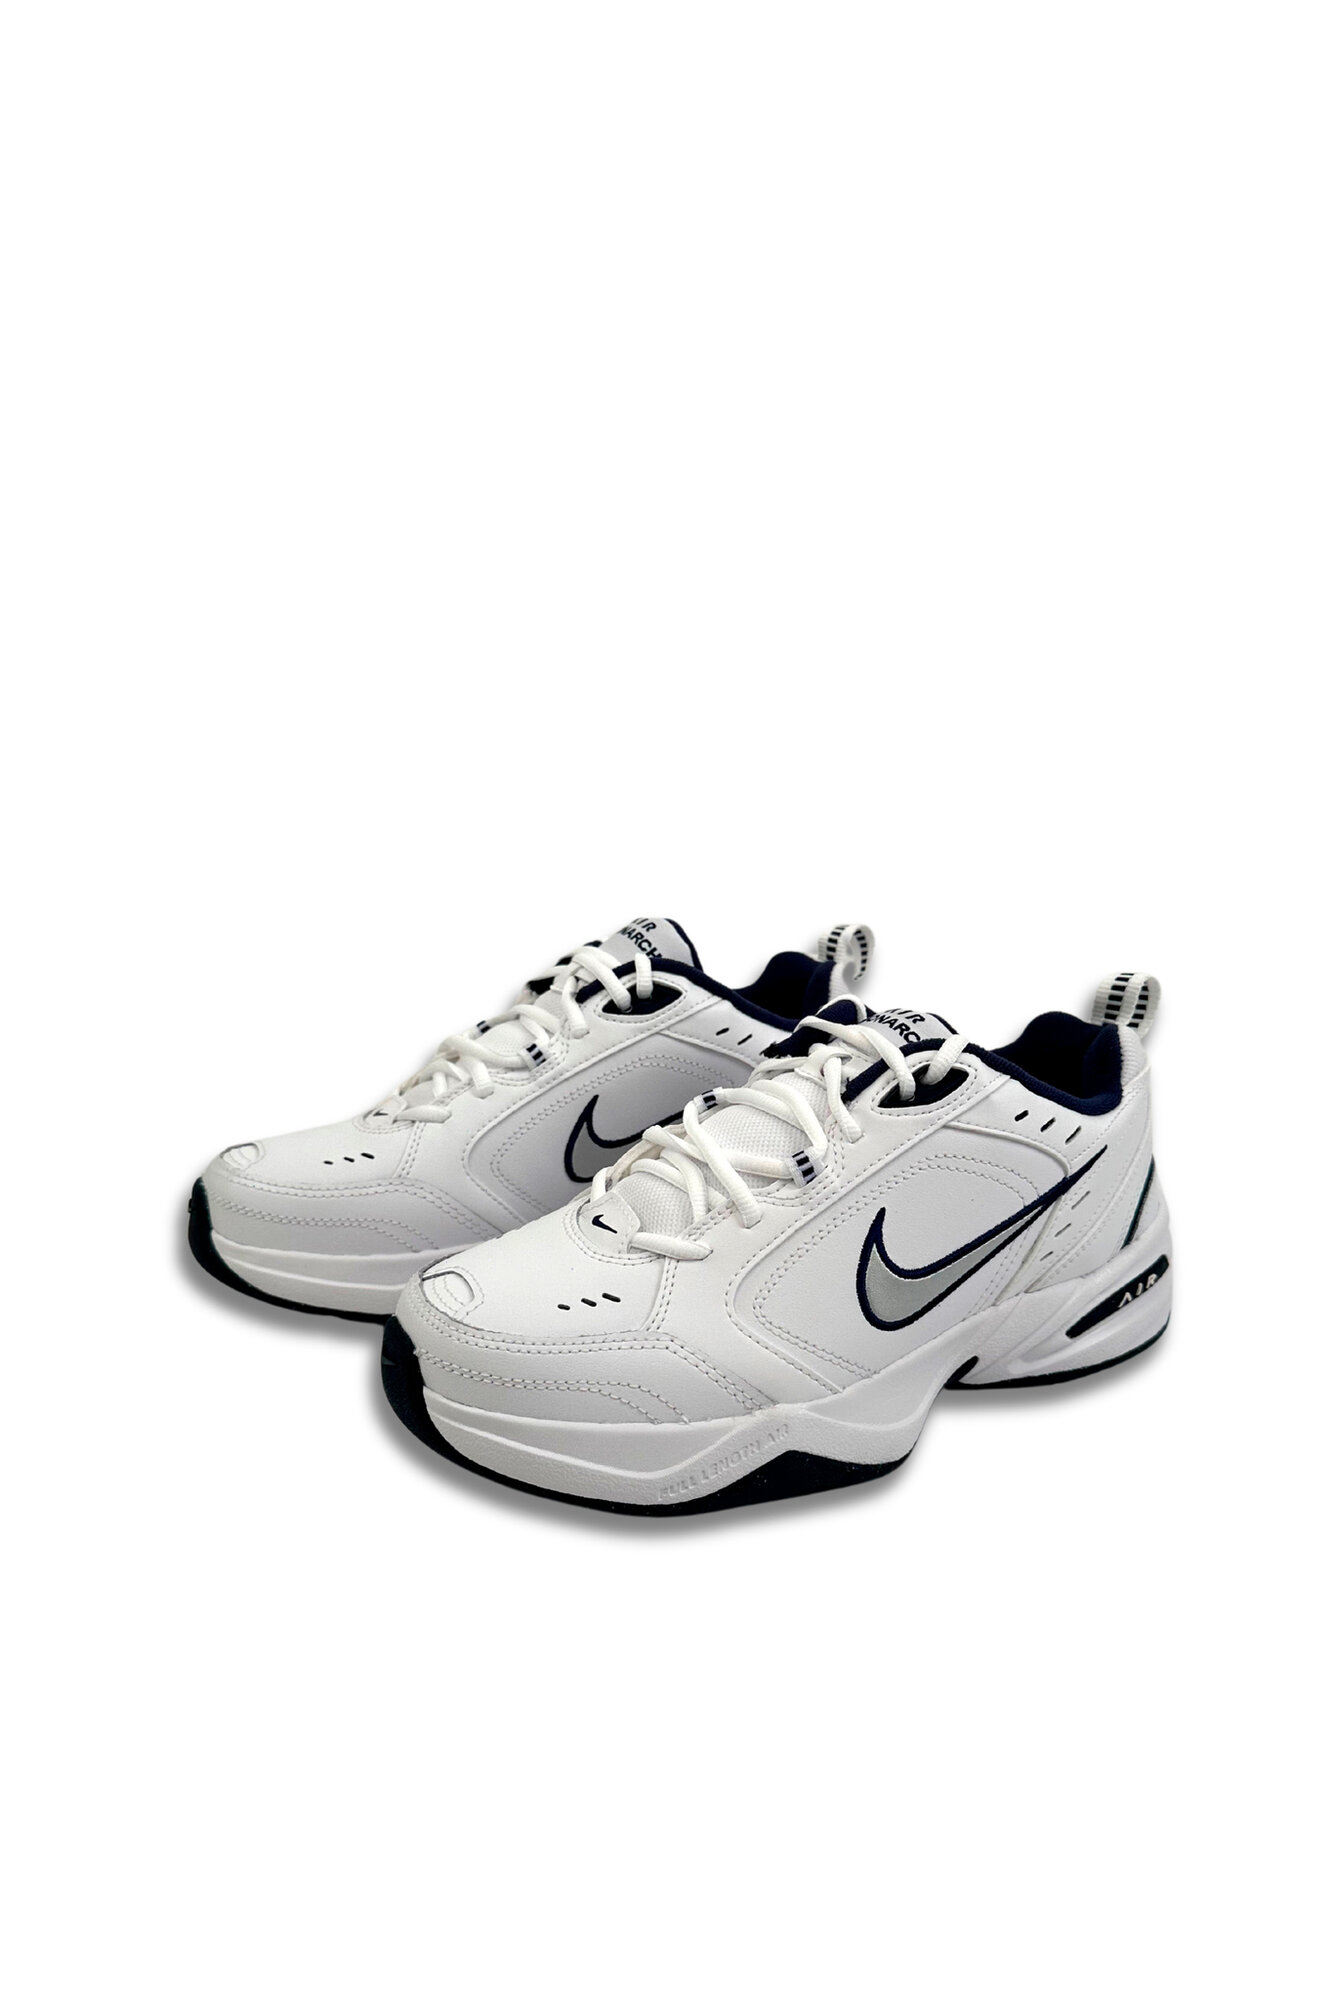 Кроссовки мужские Nike Original Air Monarch IV Training Shoe